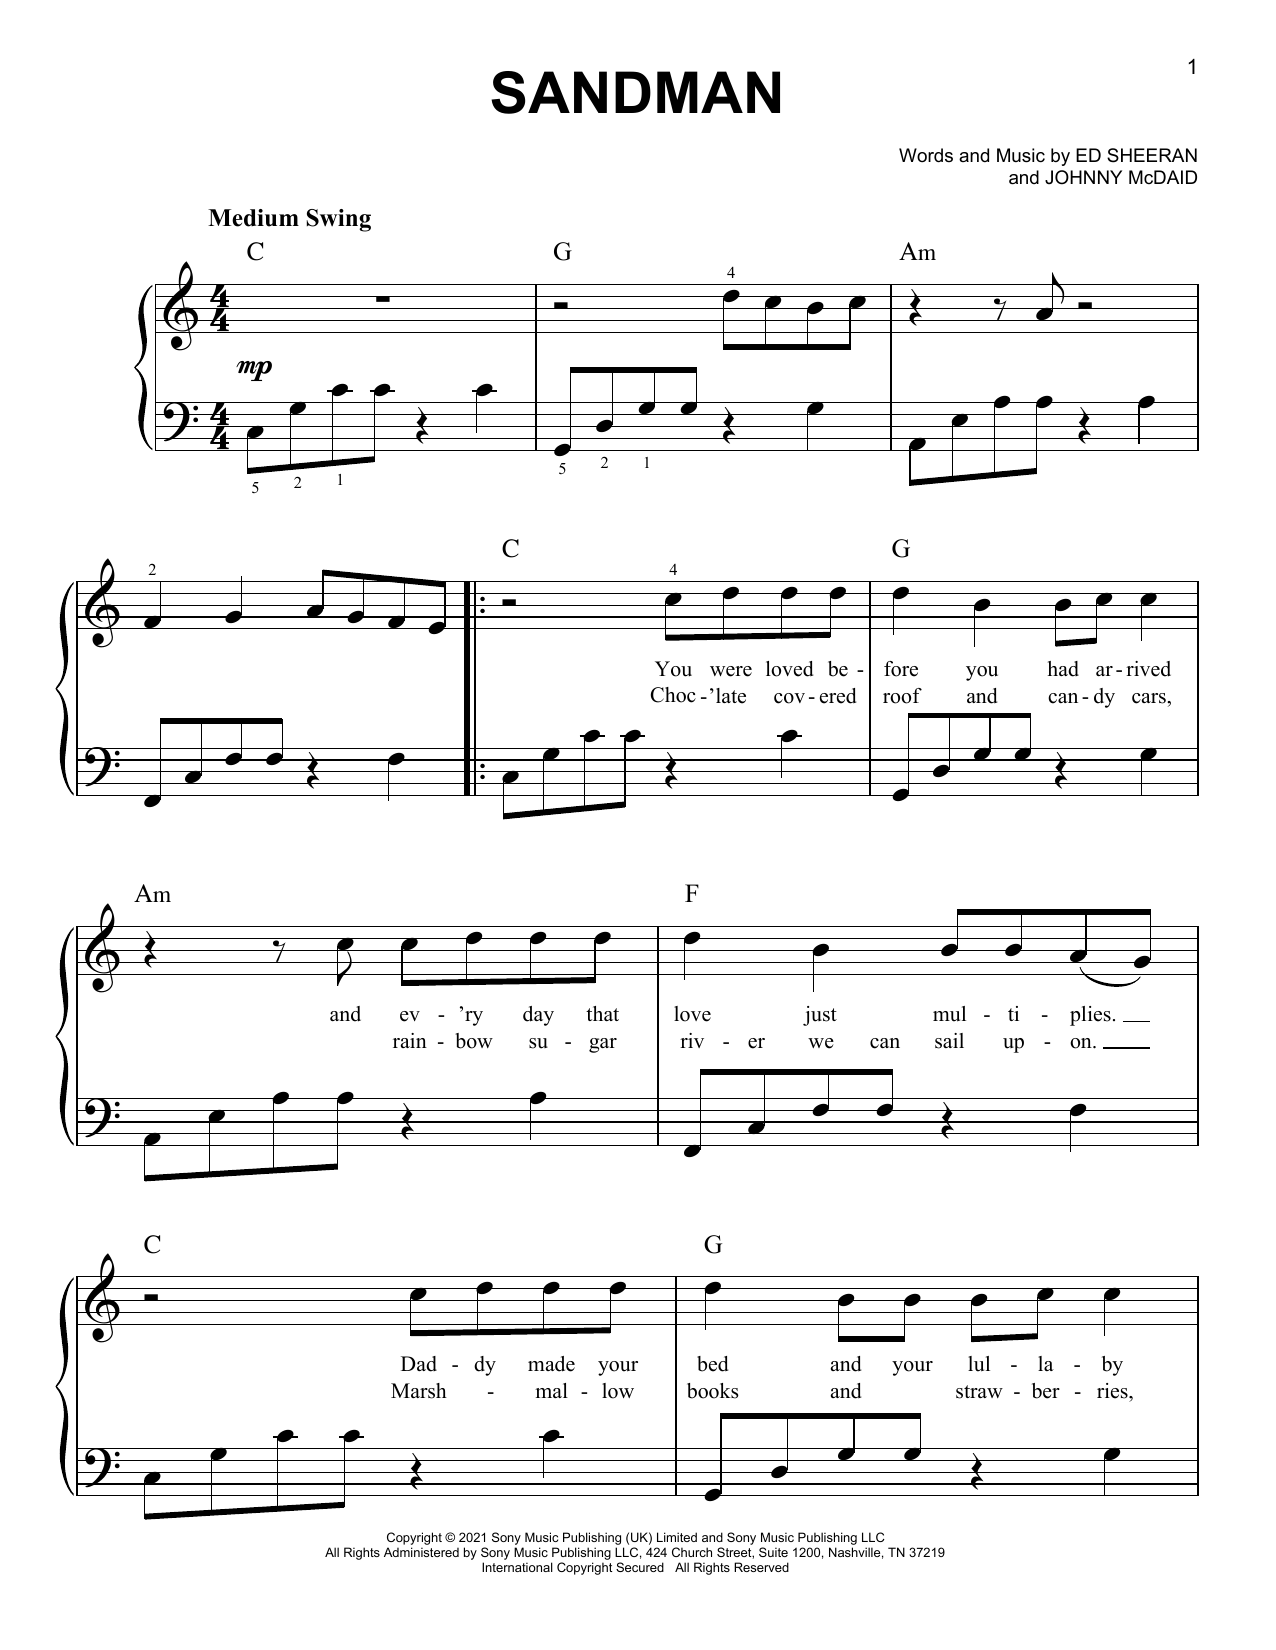 Ed Sheeran Sandman Sheet Music Notes & Chords for Piano, Vocal & Guitar (Right-Hand Melody) - Download or Print PDF